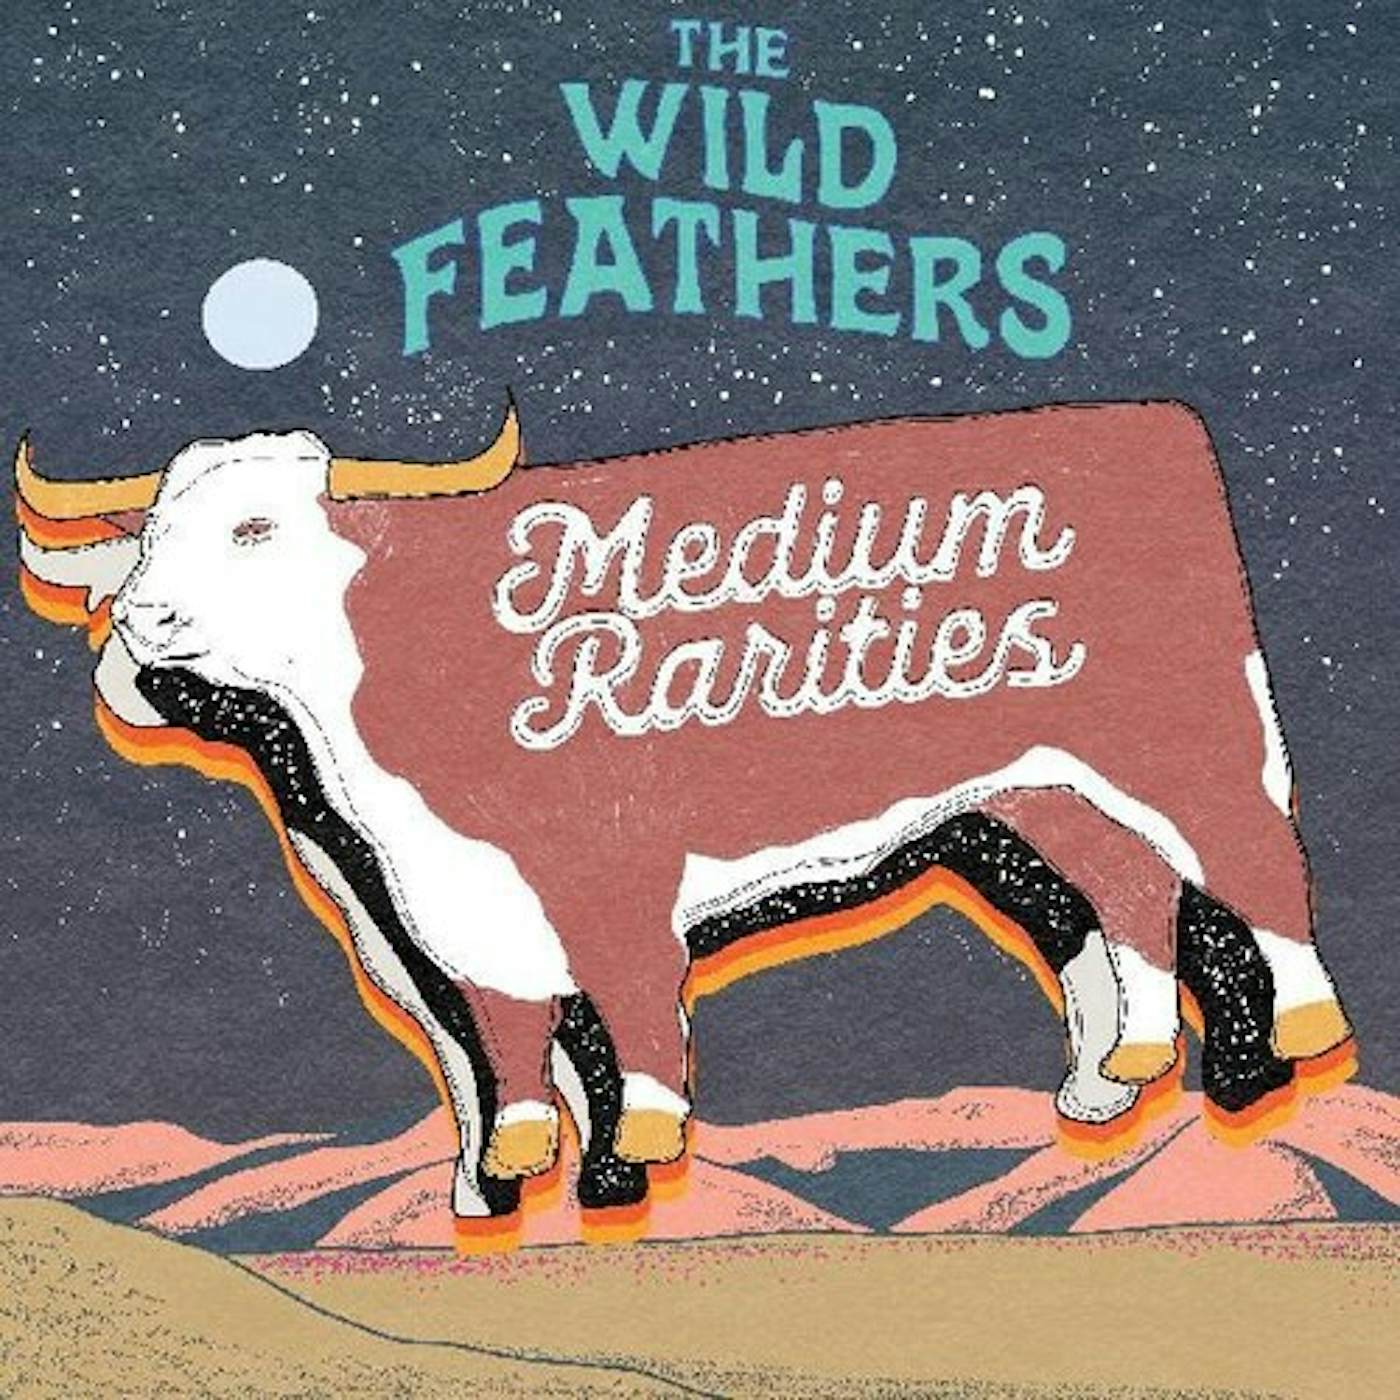 The Wild Feathers Medium Rarities Vinyl Record